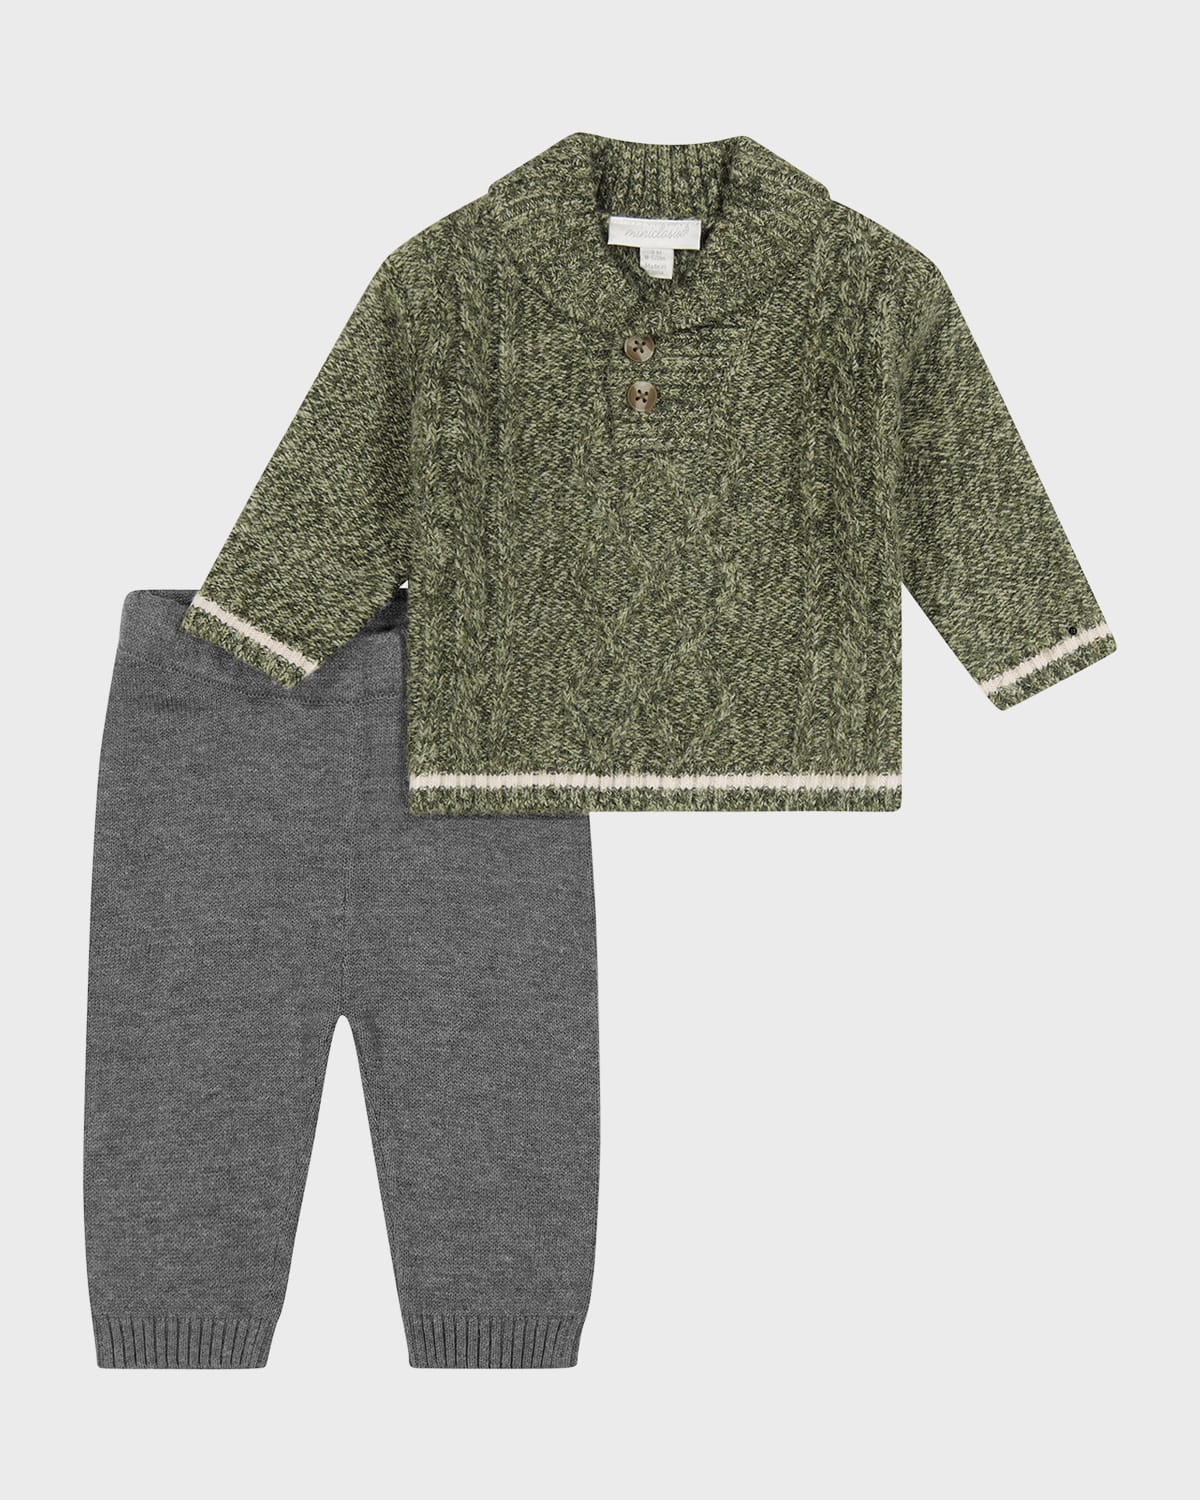 Miniclasix Kids' Boy's Knit Shawl Sweater In Green